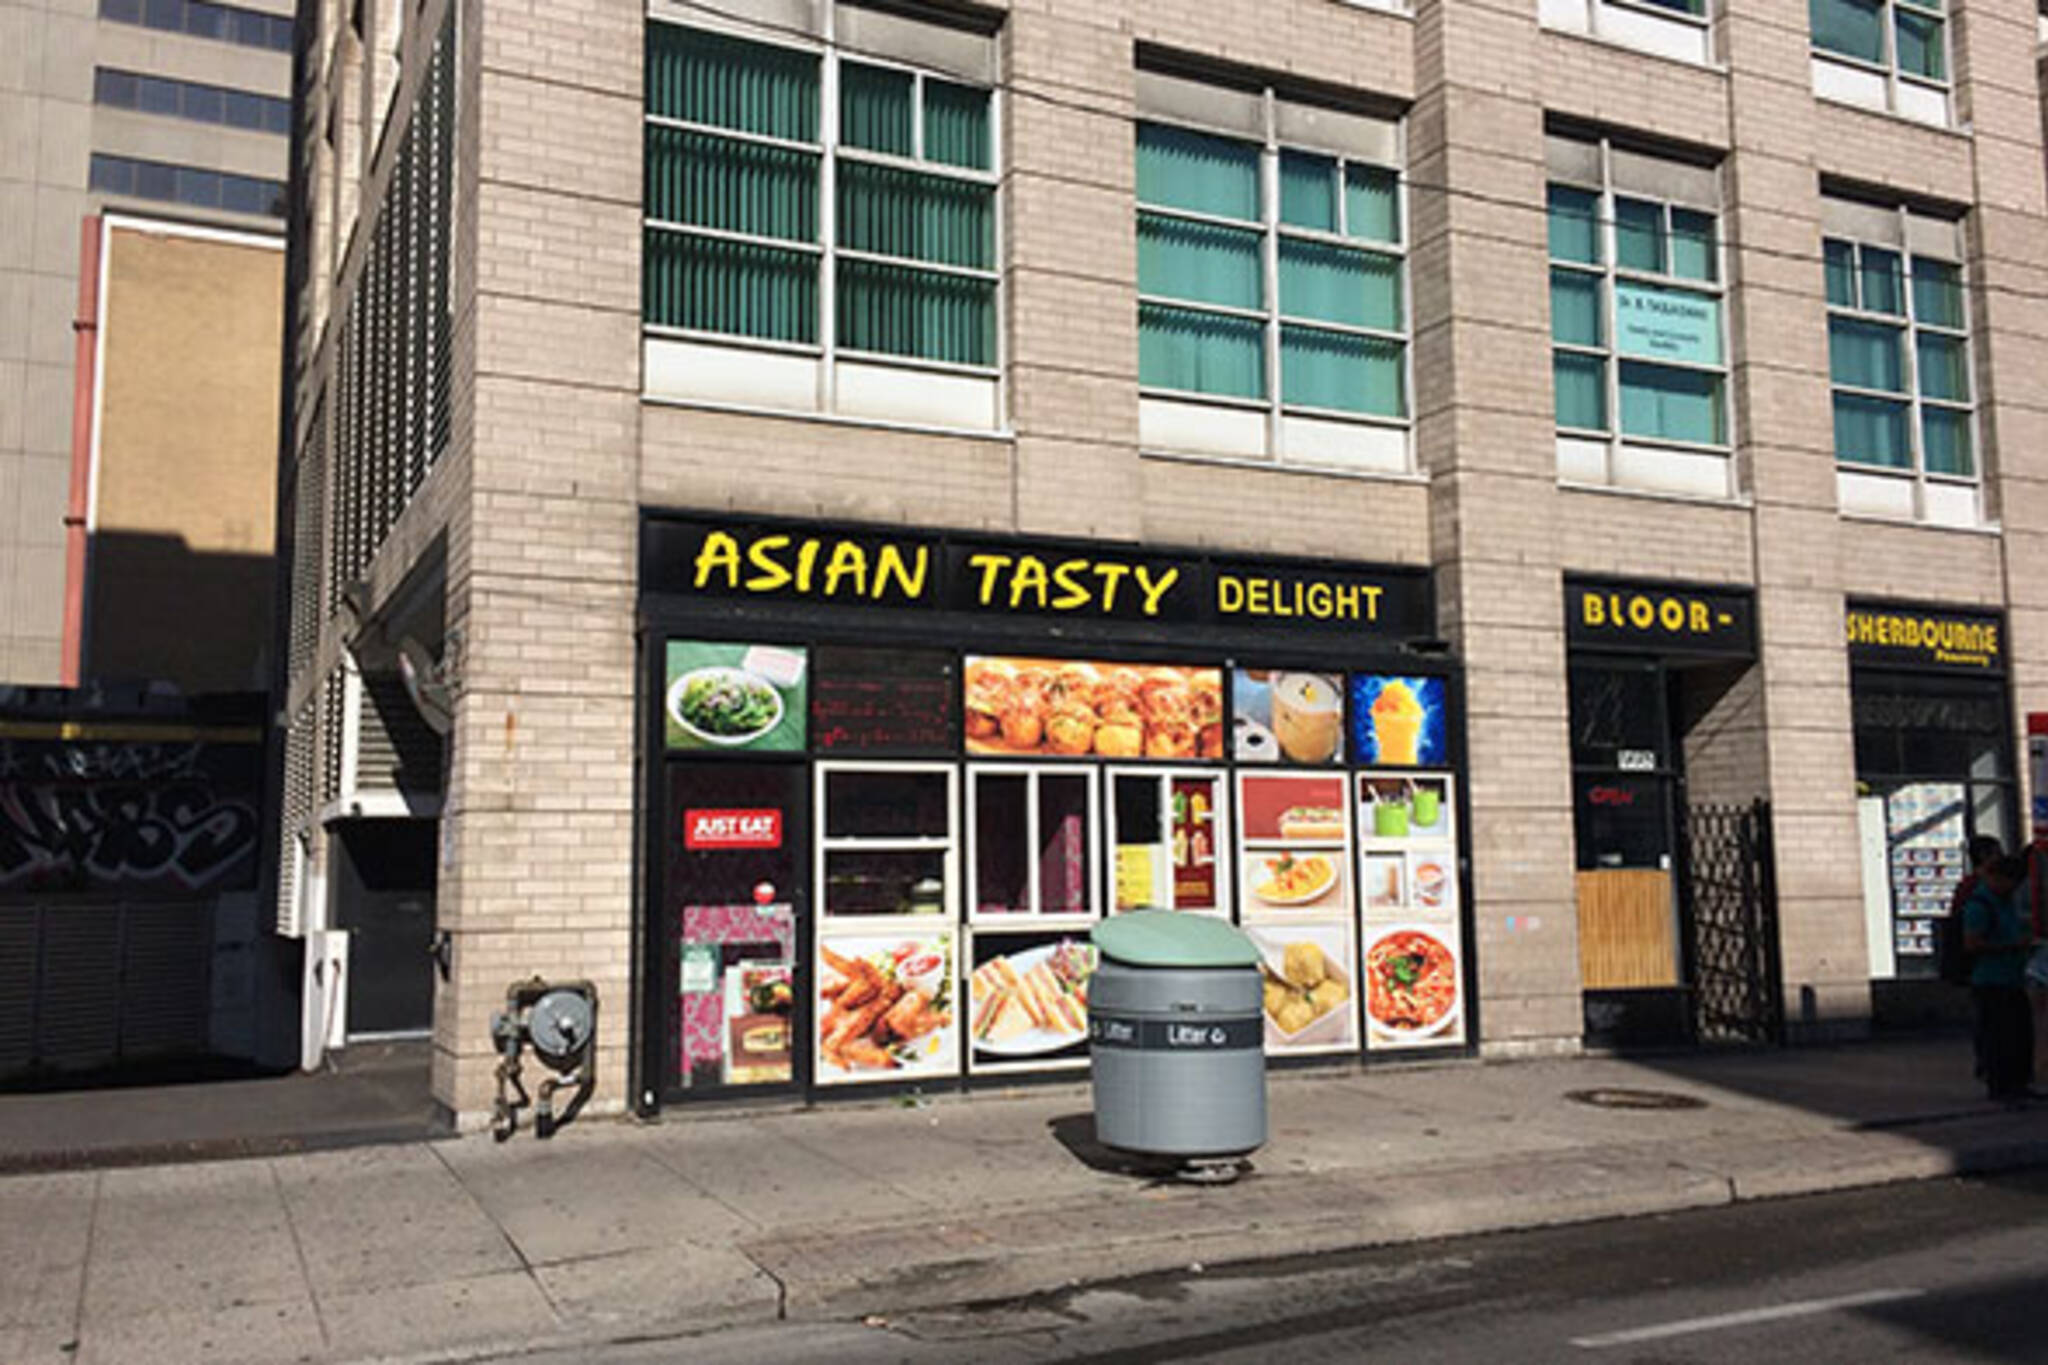 Asian tasty delight Toronto